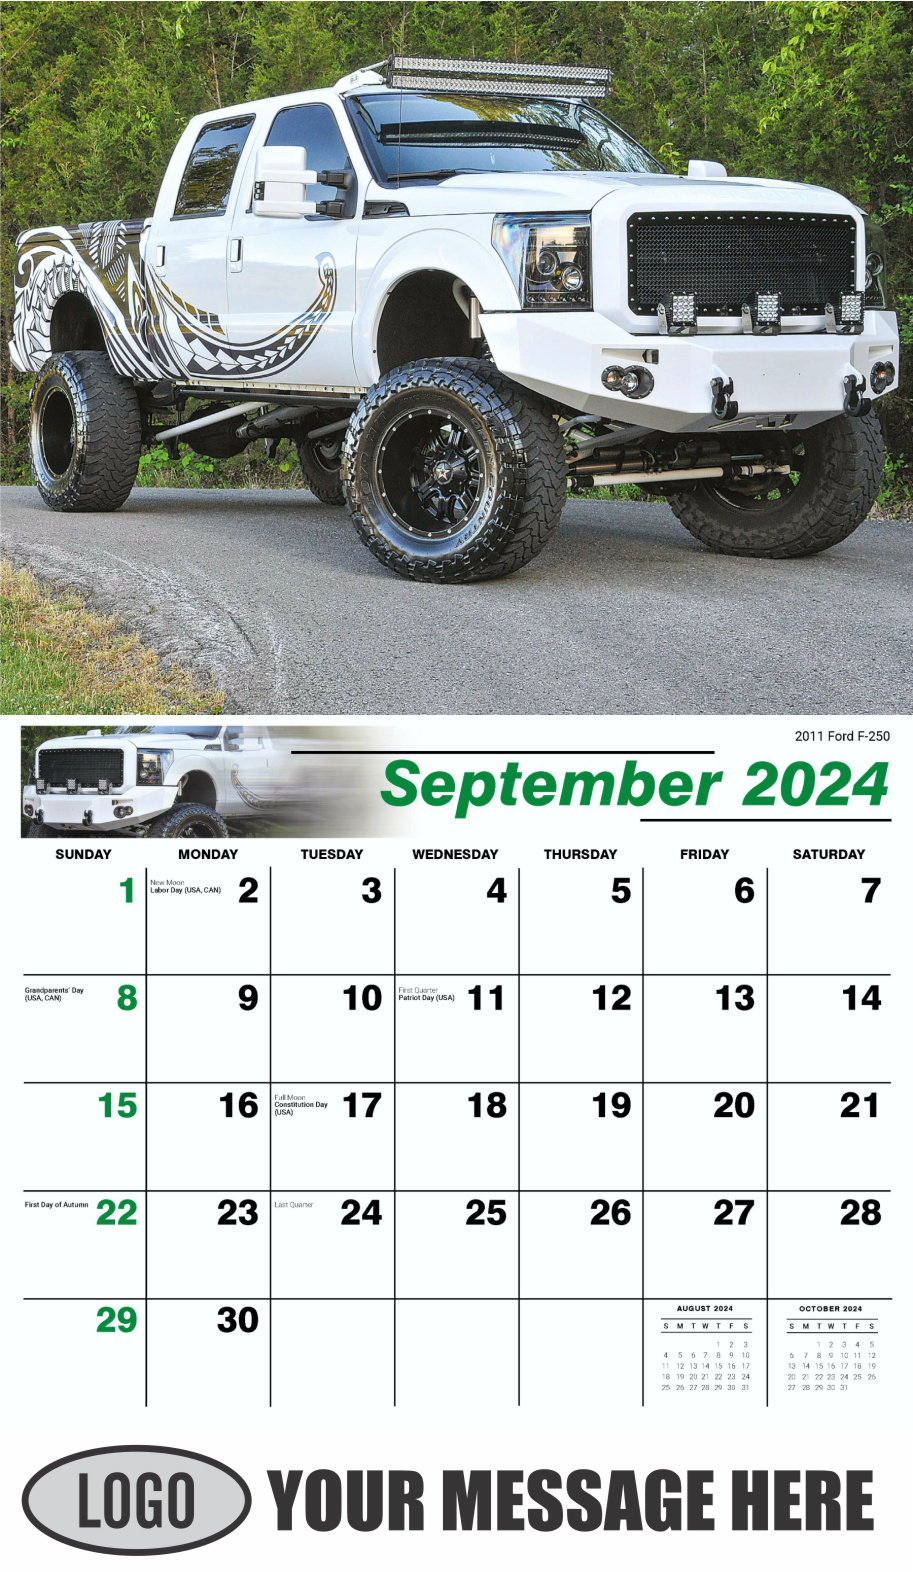 Pumped-Up Pickups 2024 Automotive Business Promo Calendar - September